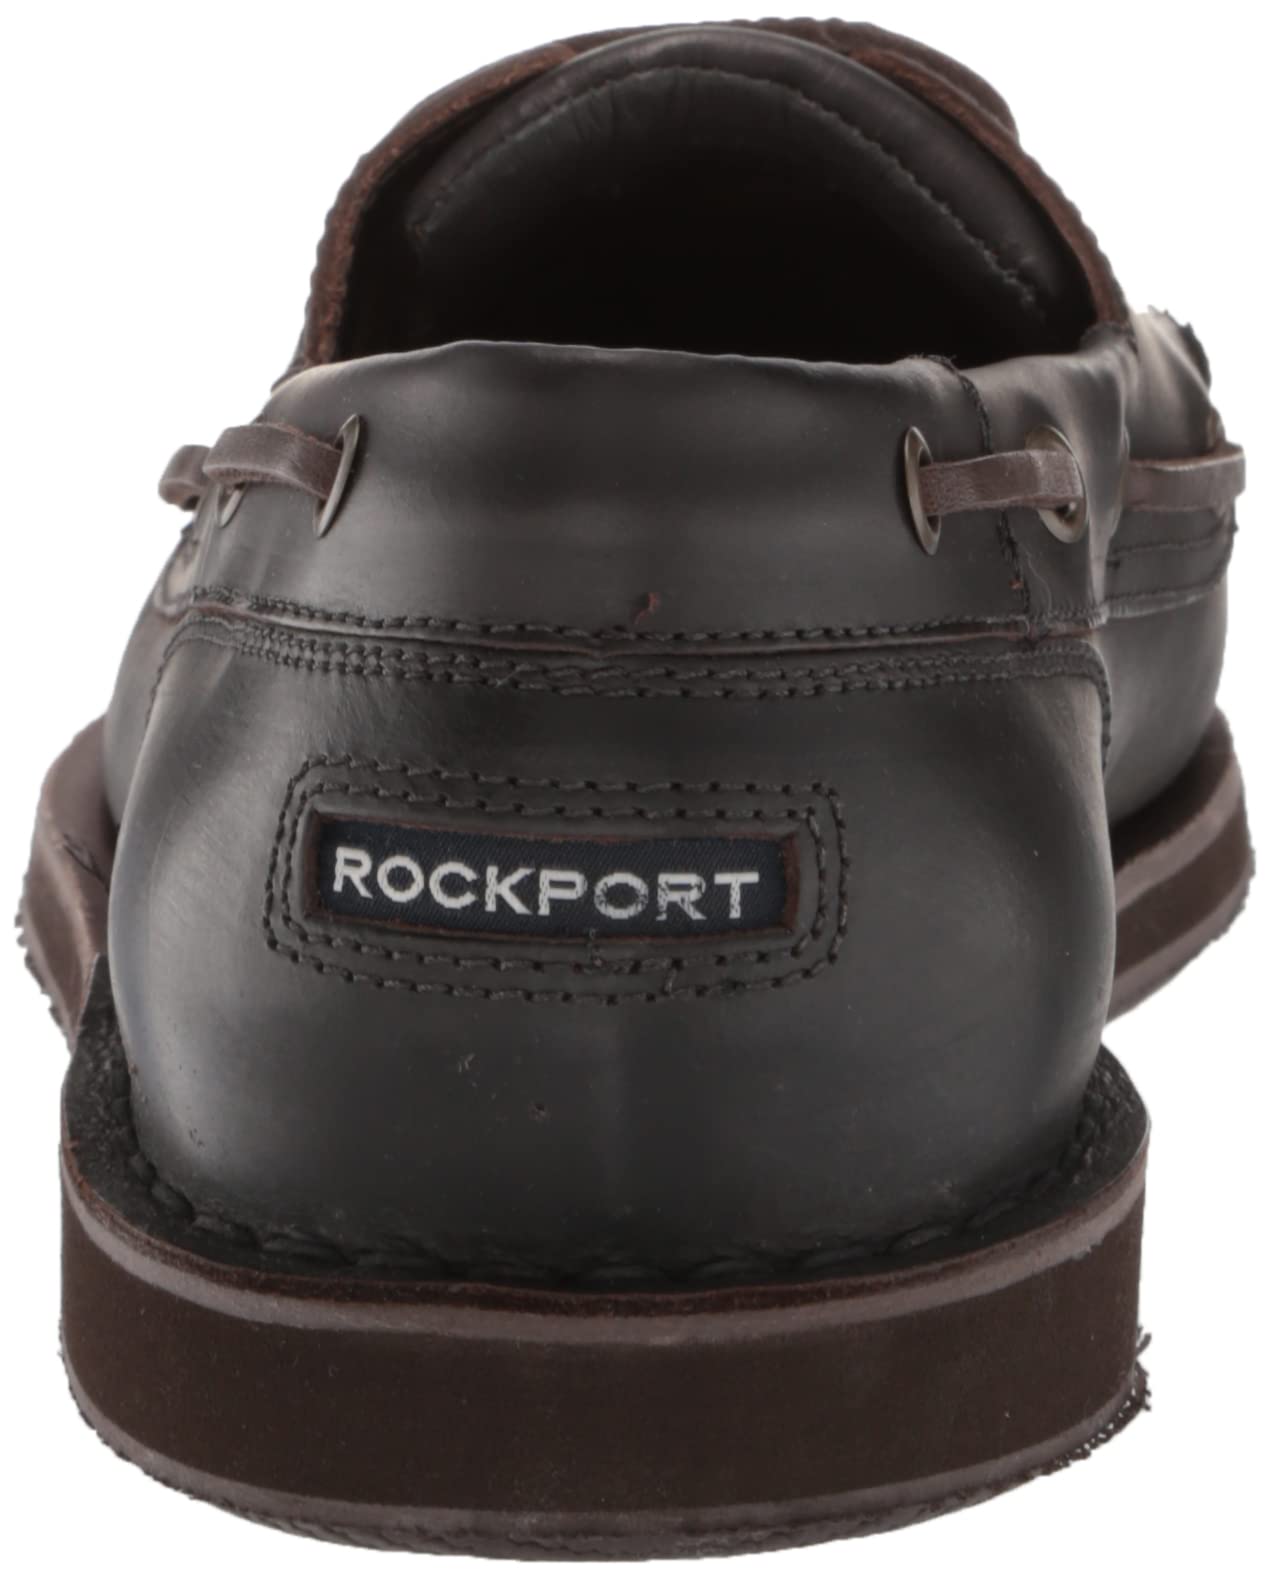 Rockport Men's Perth Boat Shoe